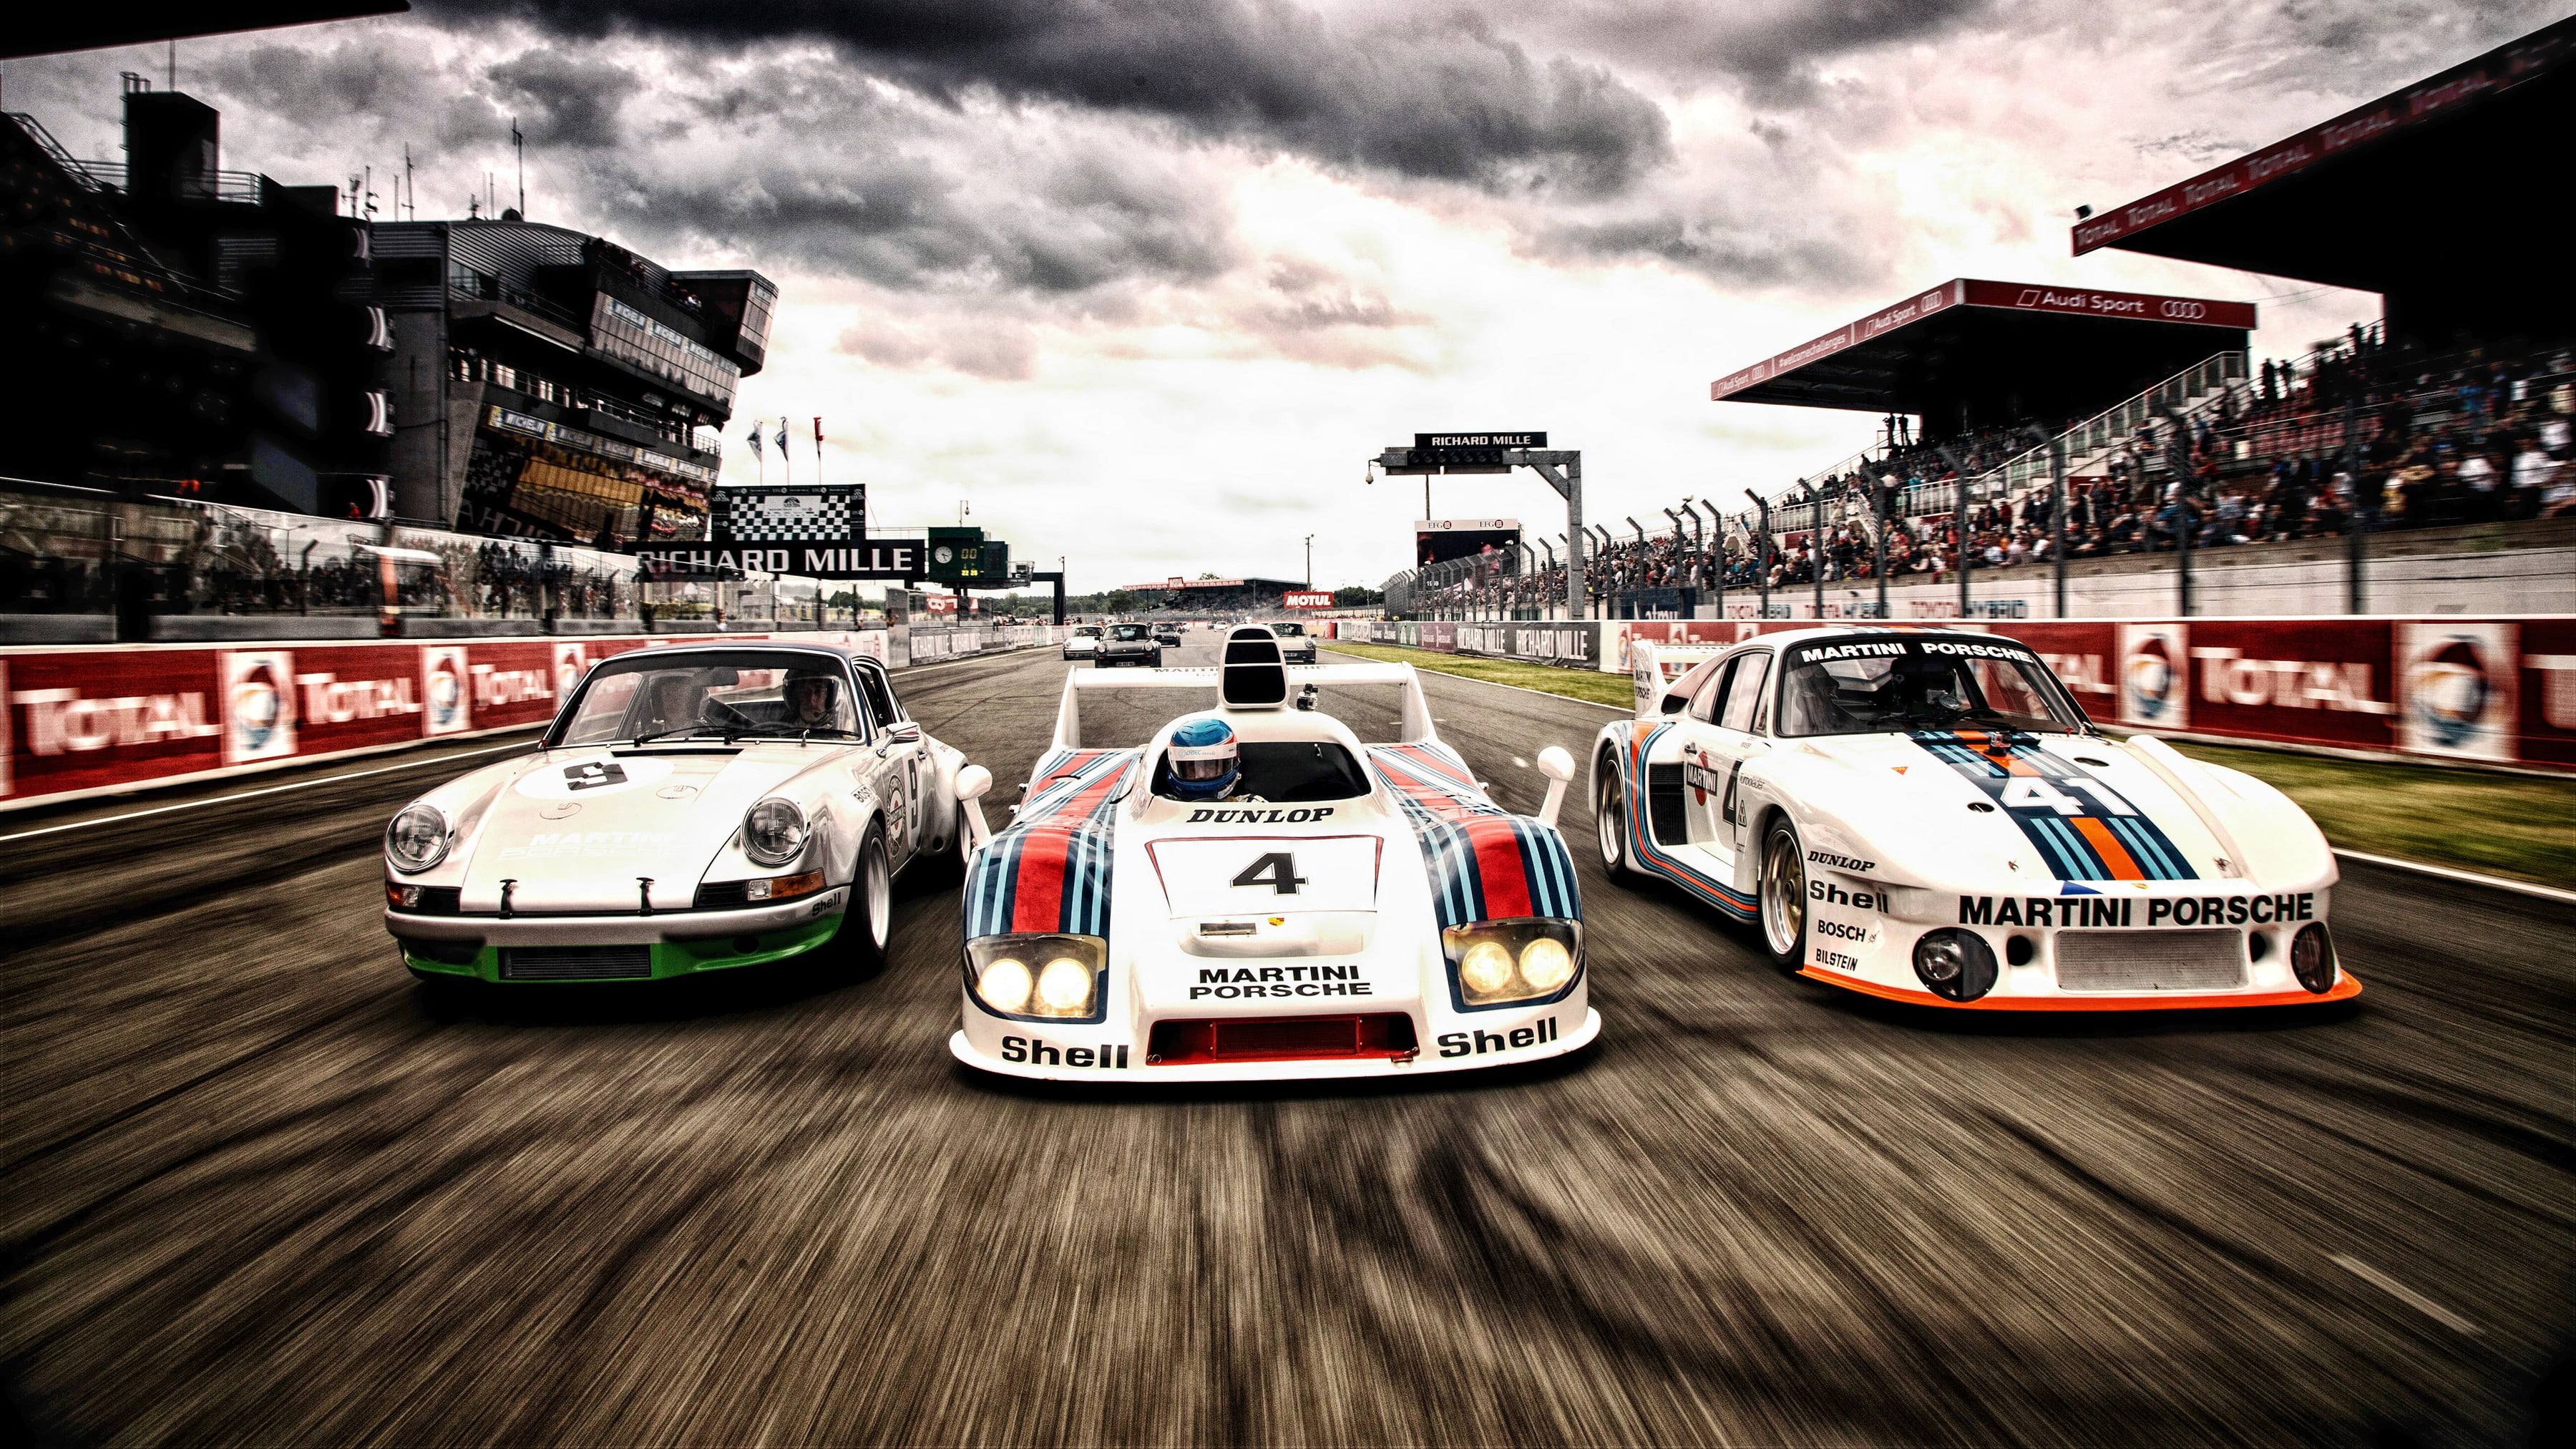 classic white car, car, race cars, Porsche, Porsche 935